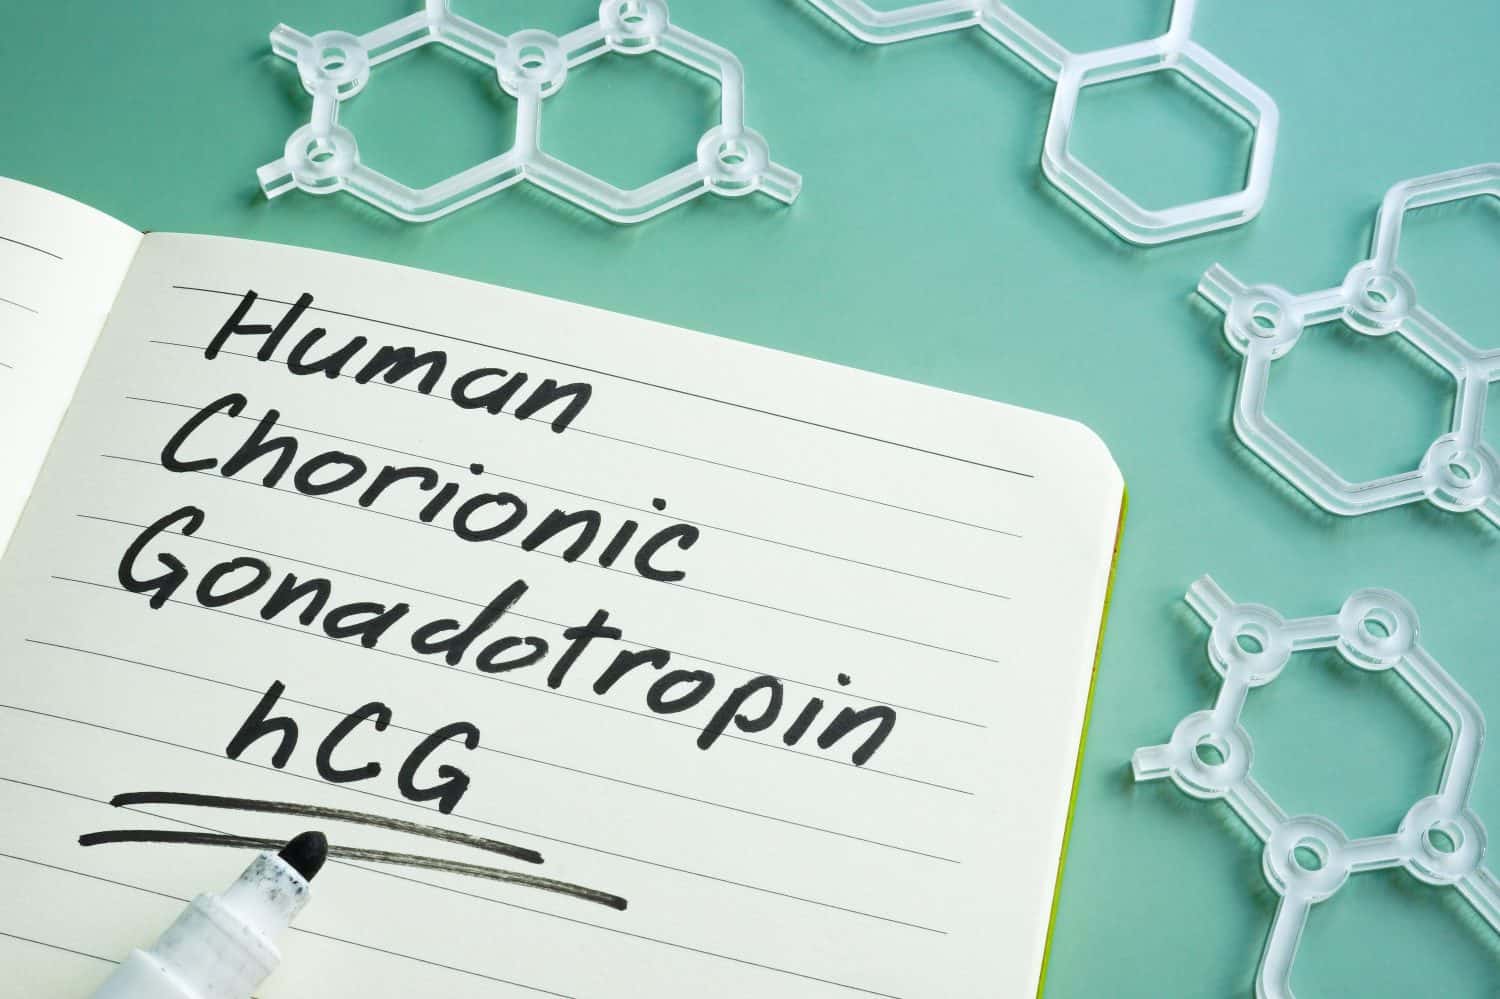 Human Chorionic Gonadotropin hCG written on the page.